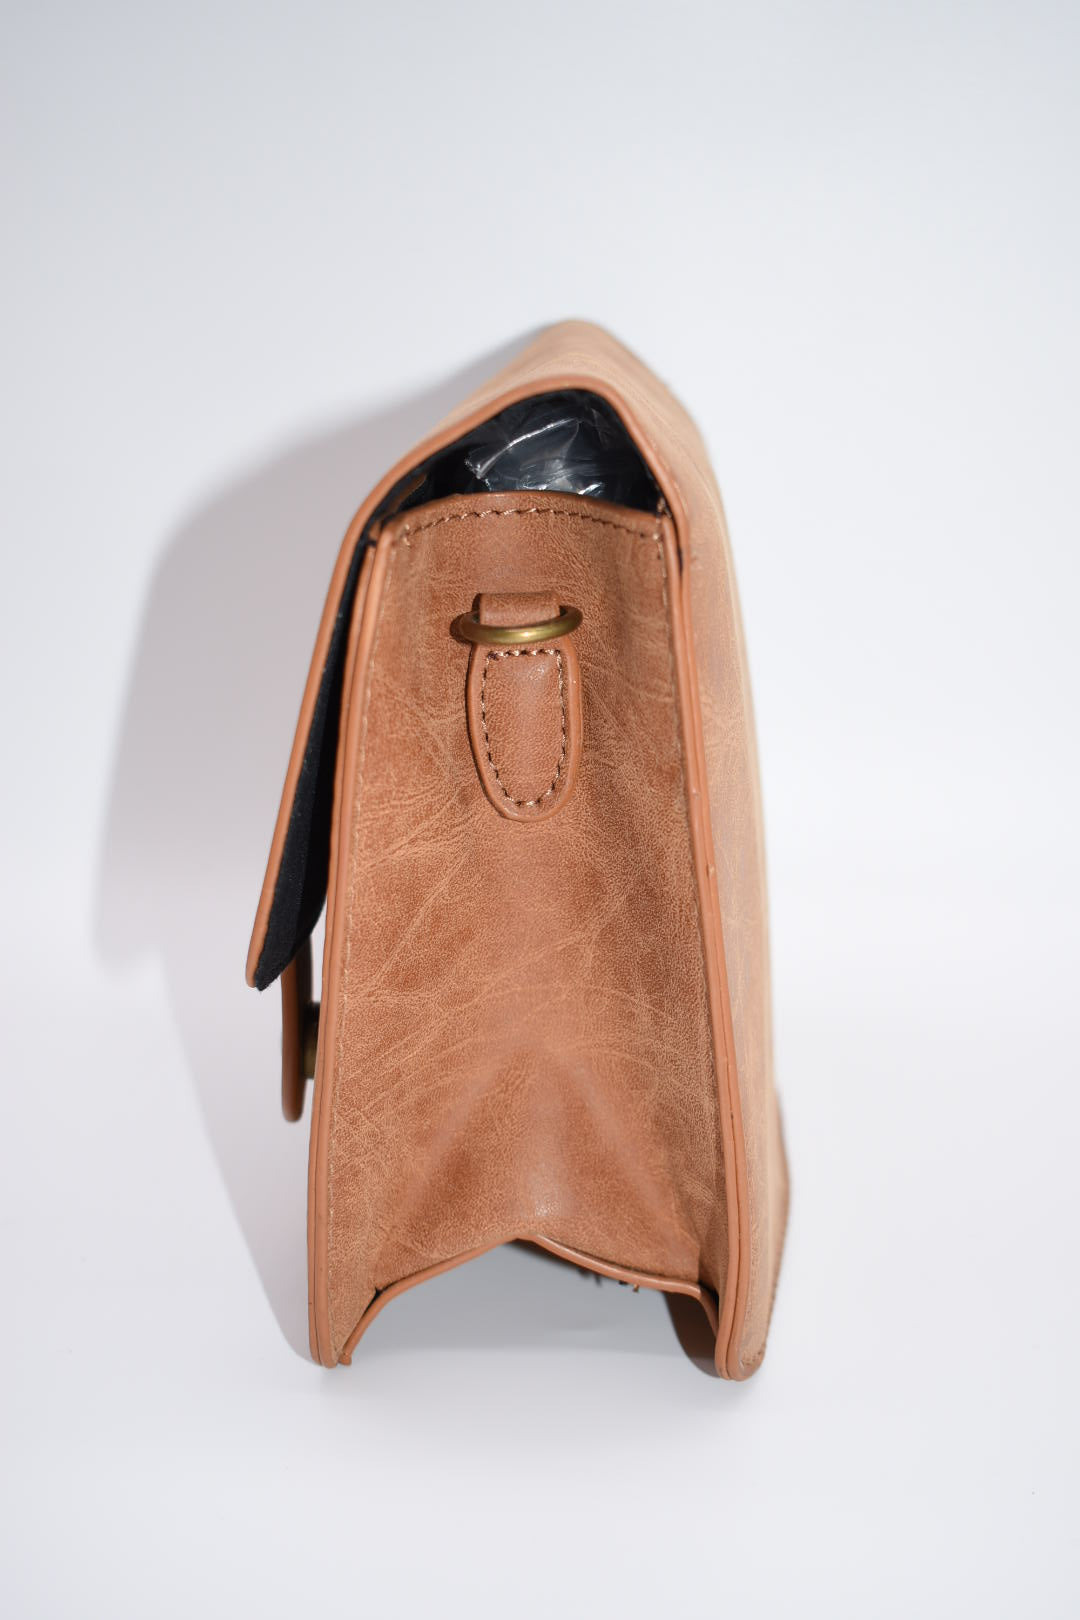 Harry Potter Mini Buffalo Saddle Bag by Typo